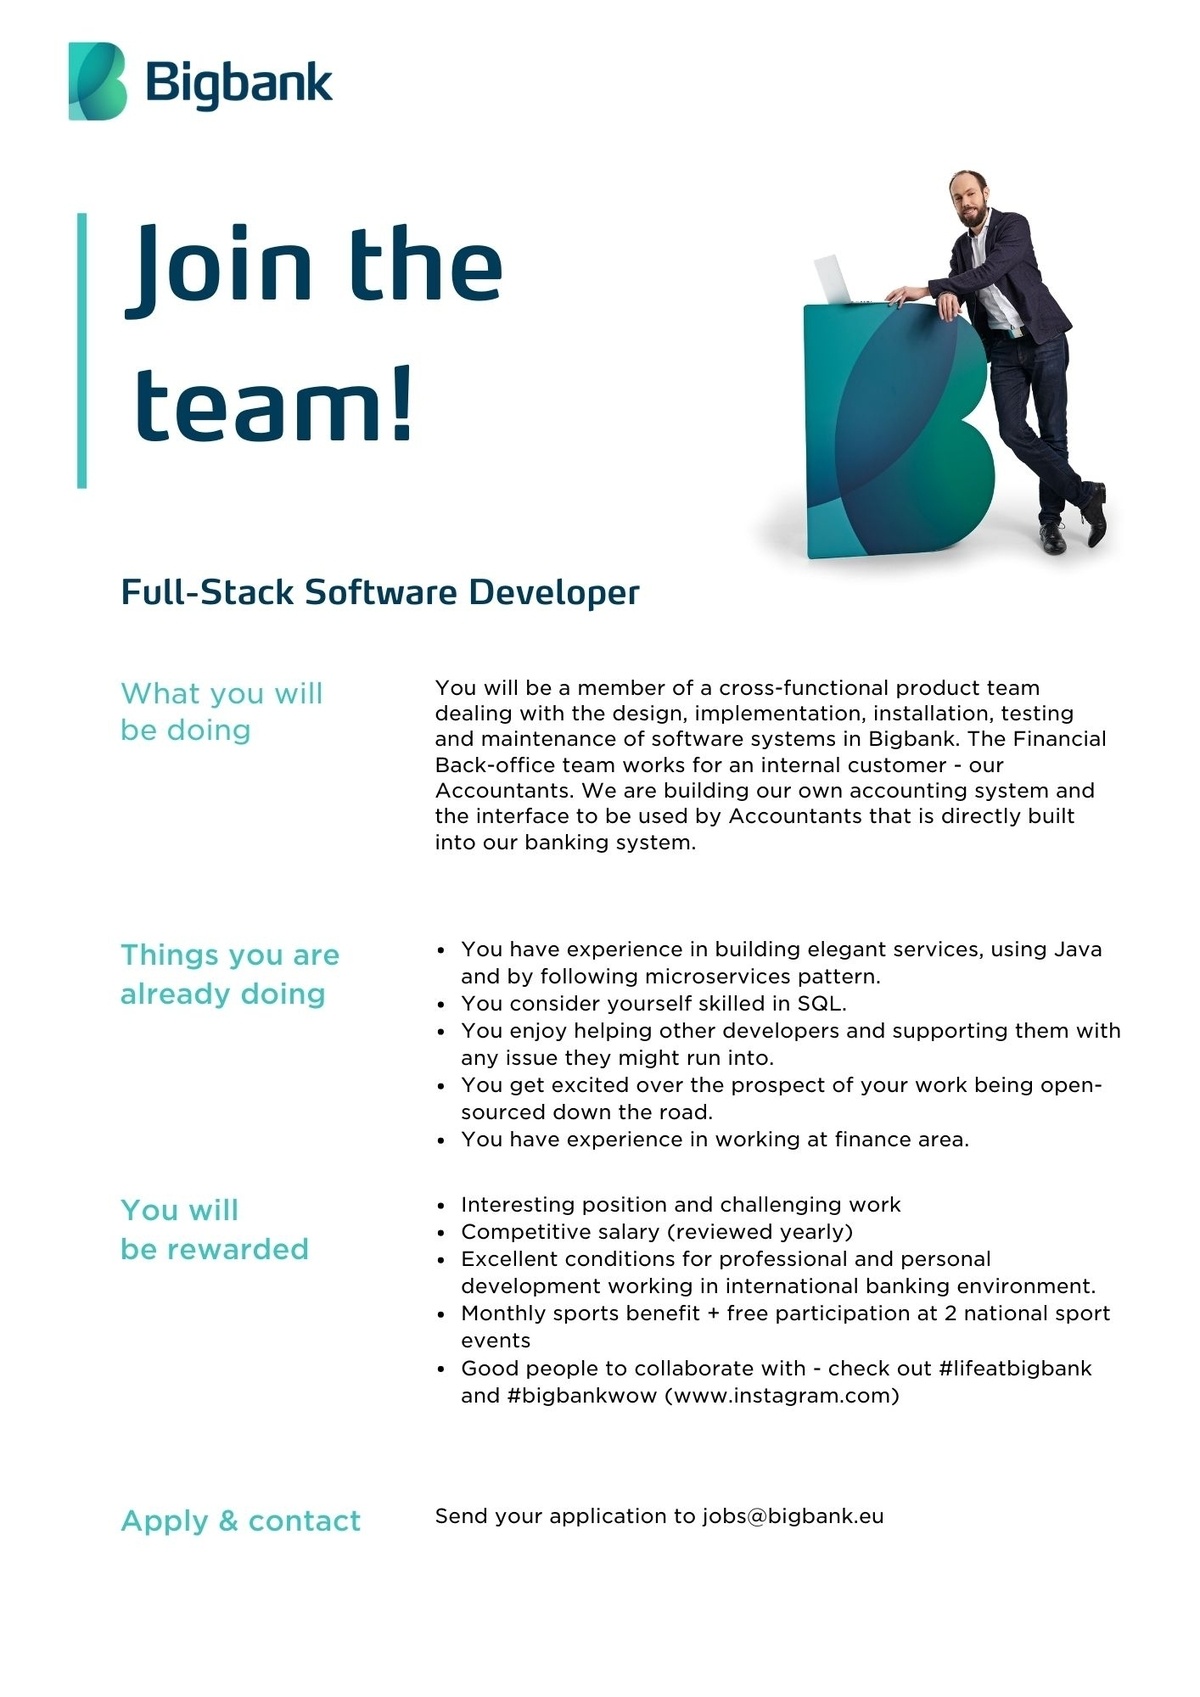 BIGBANK AS Full-Stack Software Developer (FBO)